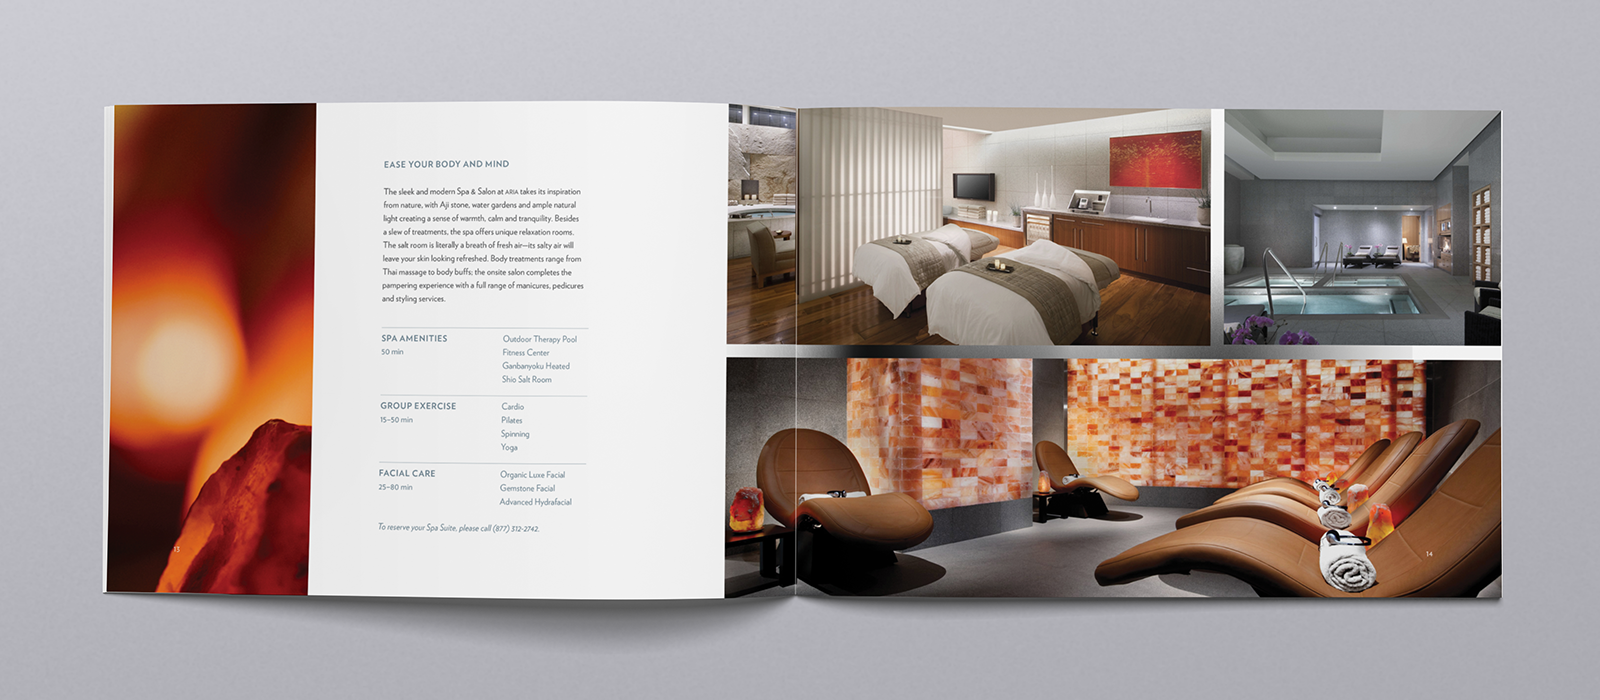 ARIA Resort and Casino Sky Suites brochure design by Silky Szeto